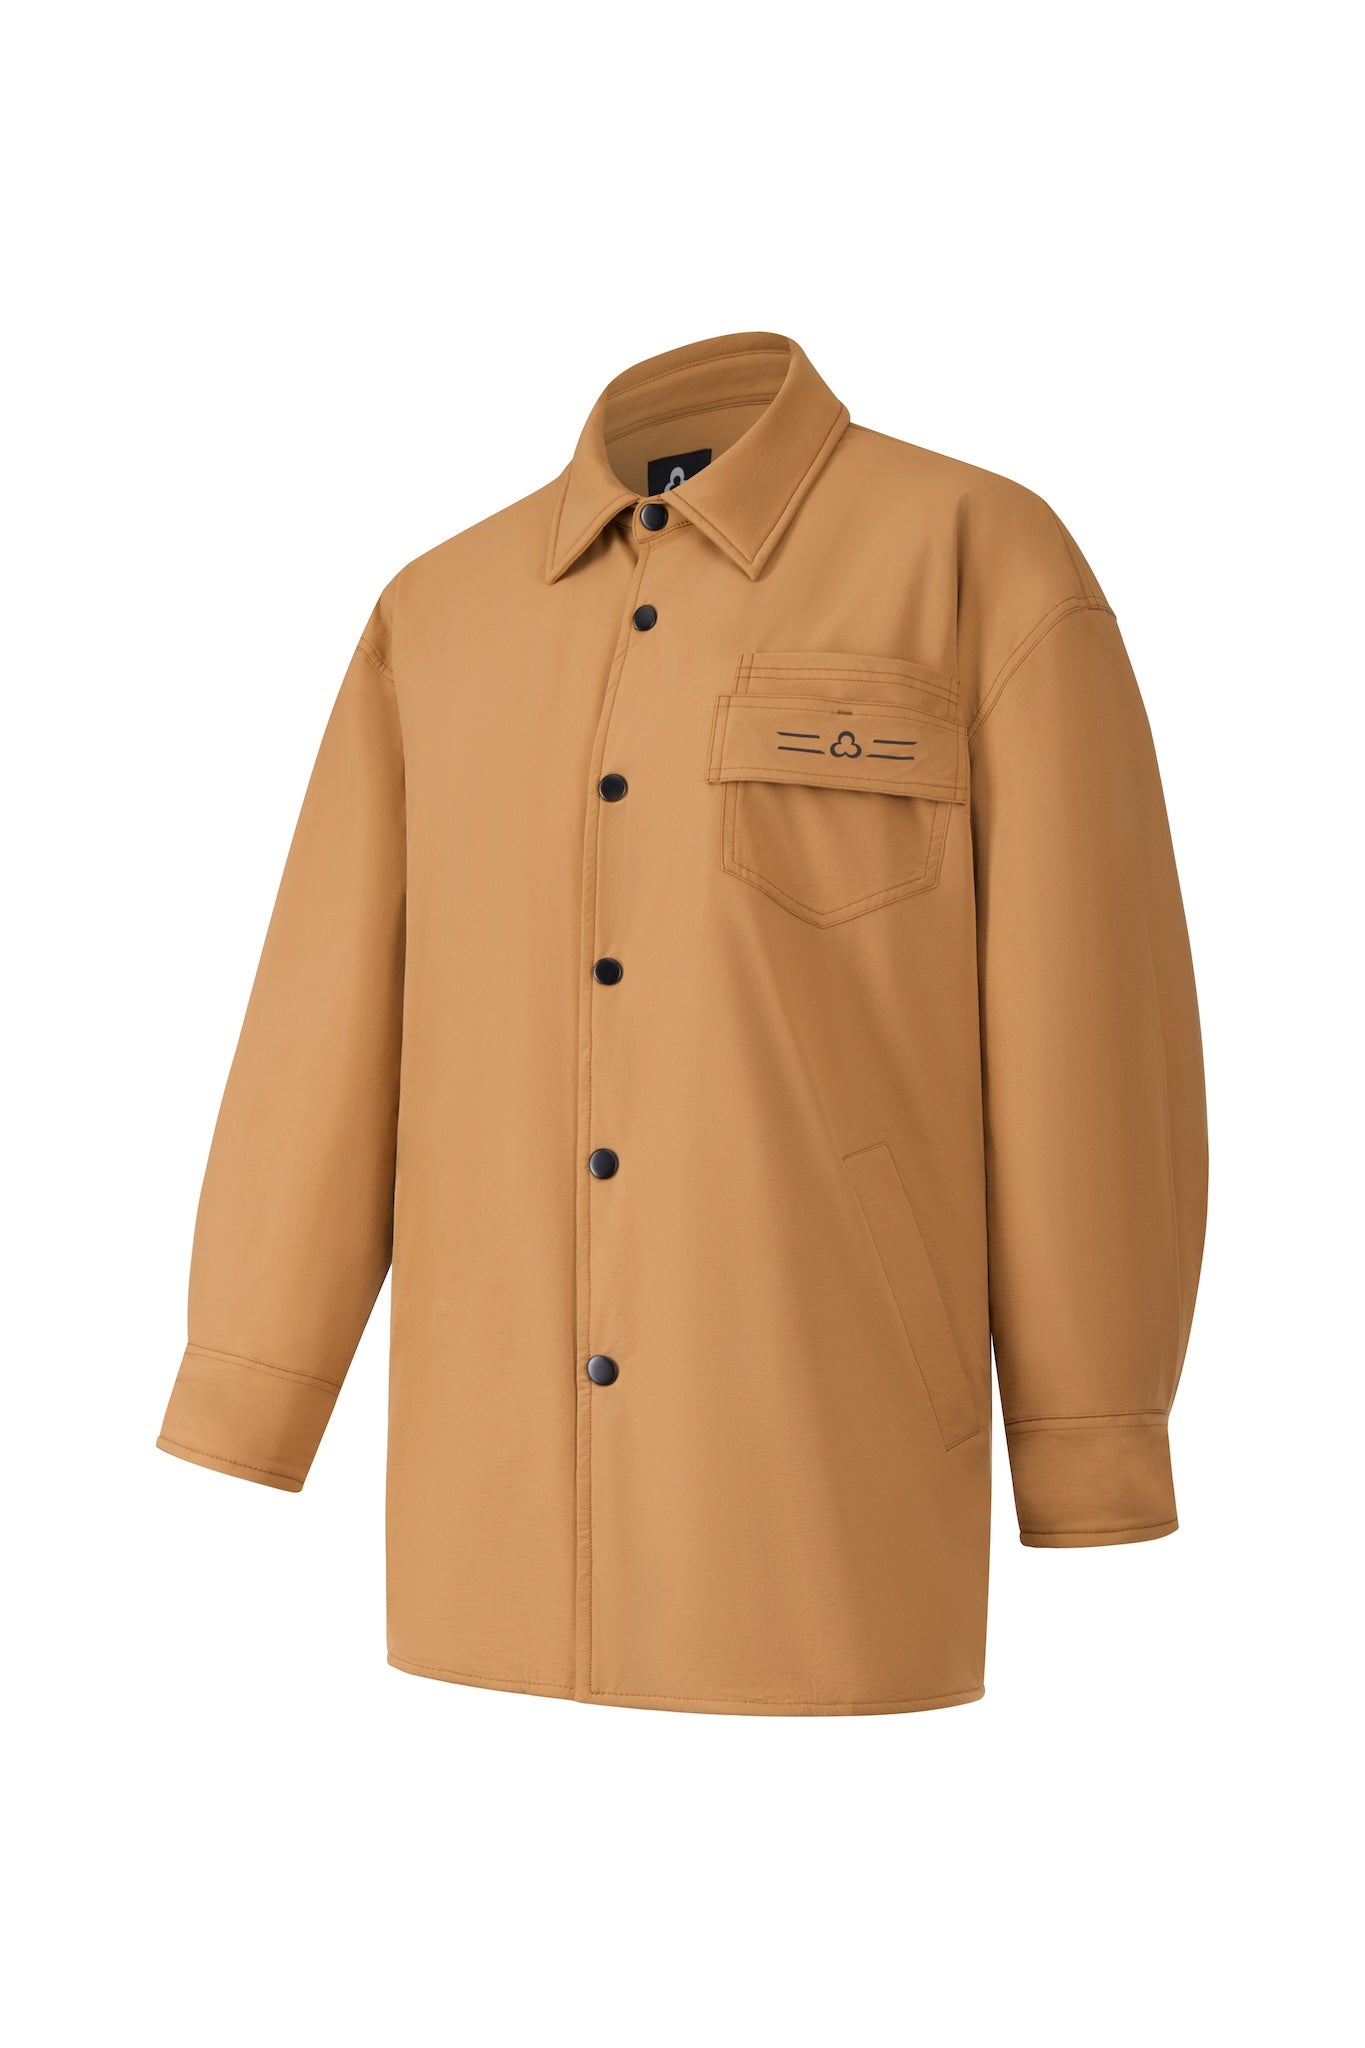 AquaGuard Cozy Cotton Shirt Quilted Jacket